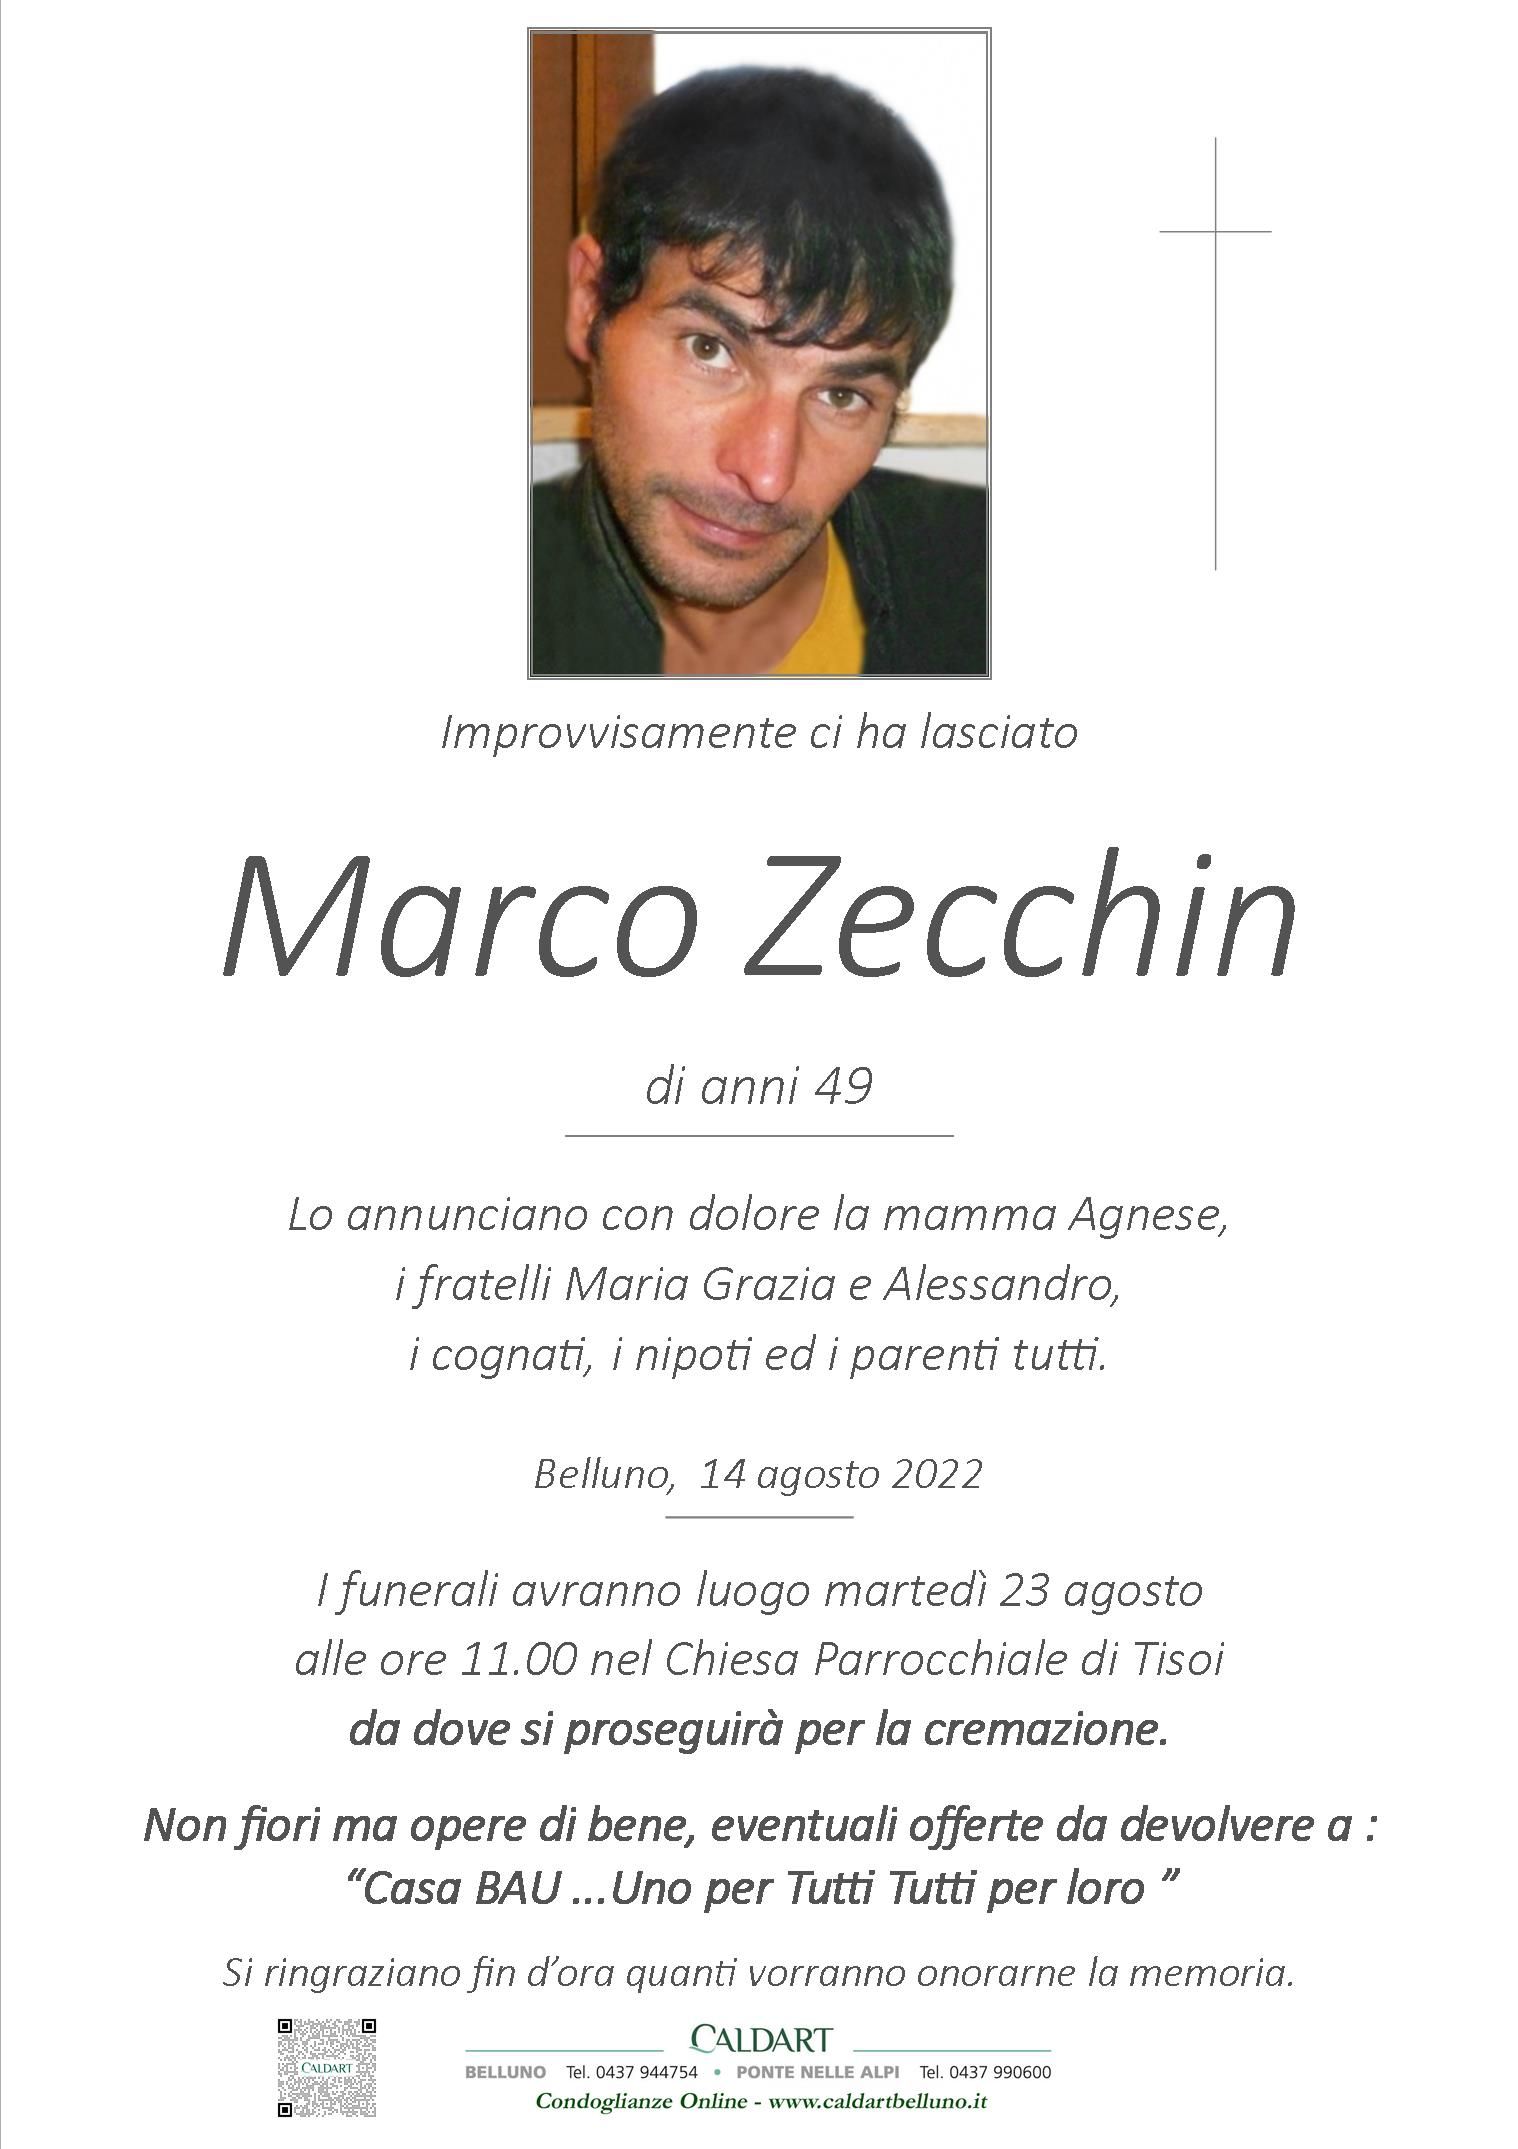 Zecchin Marco